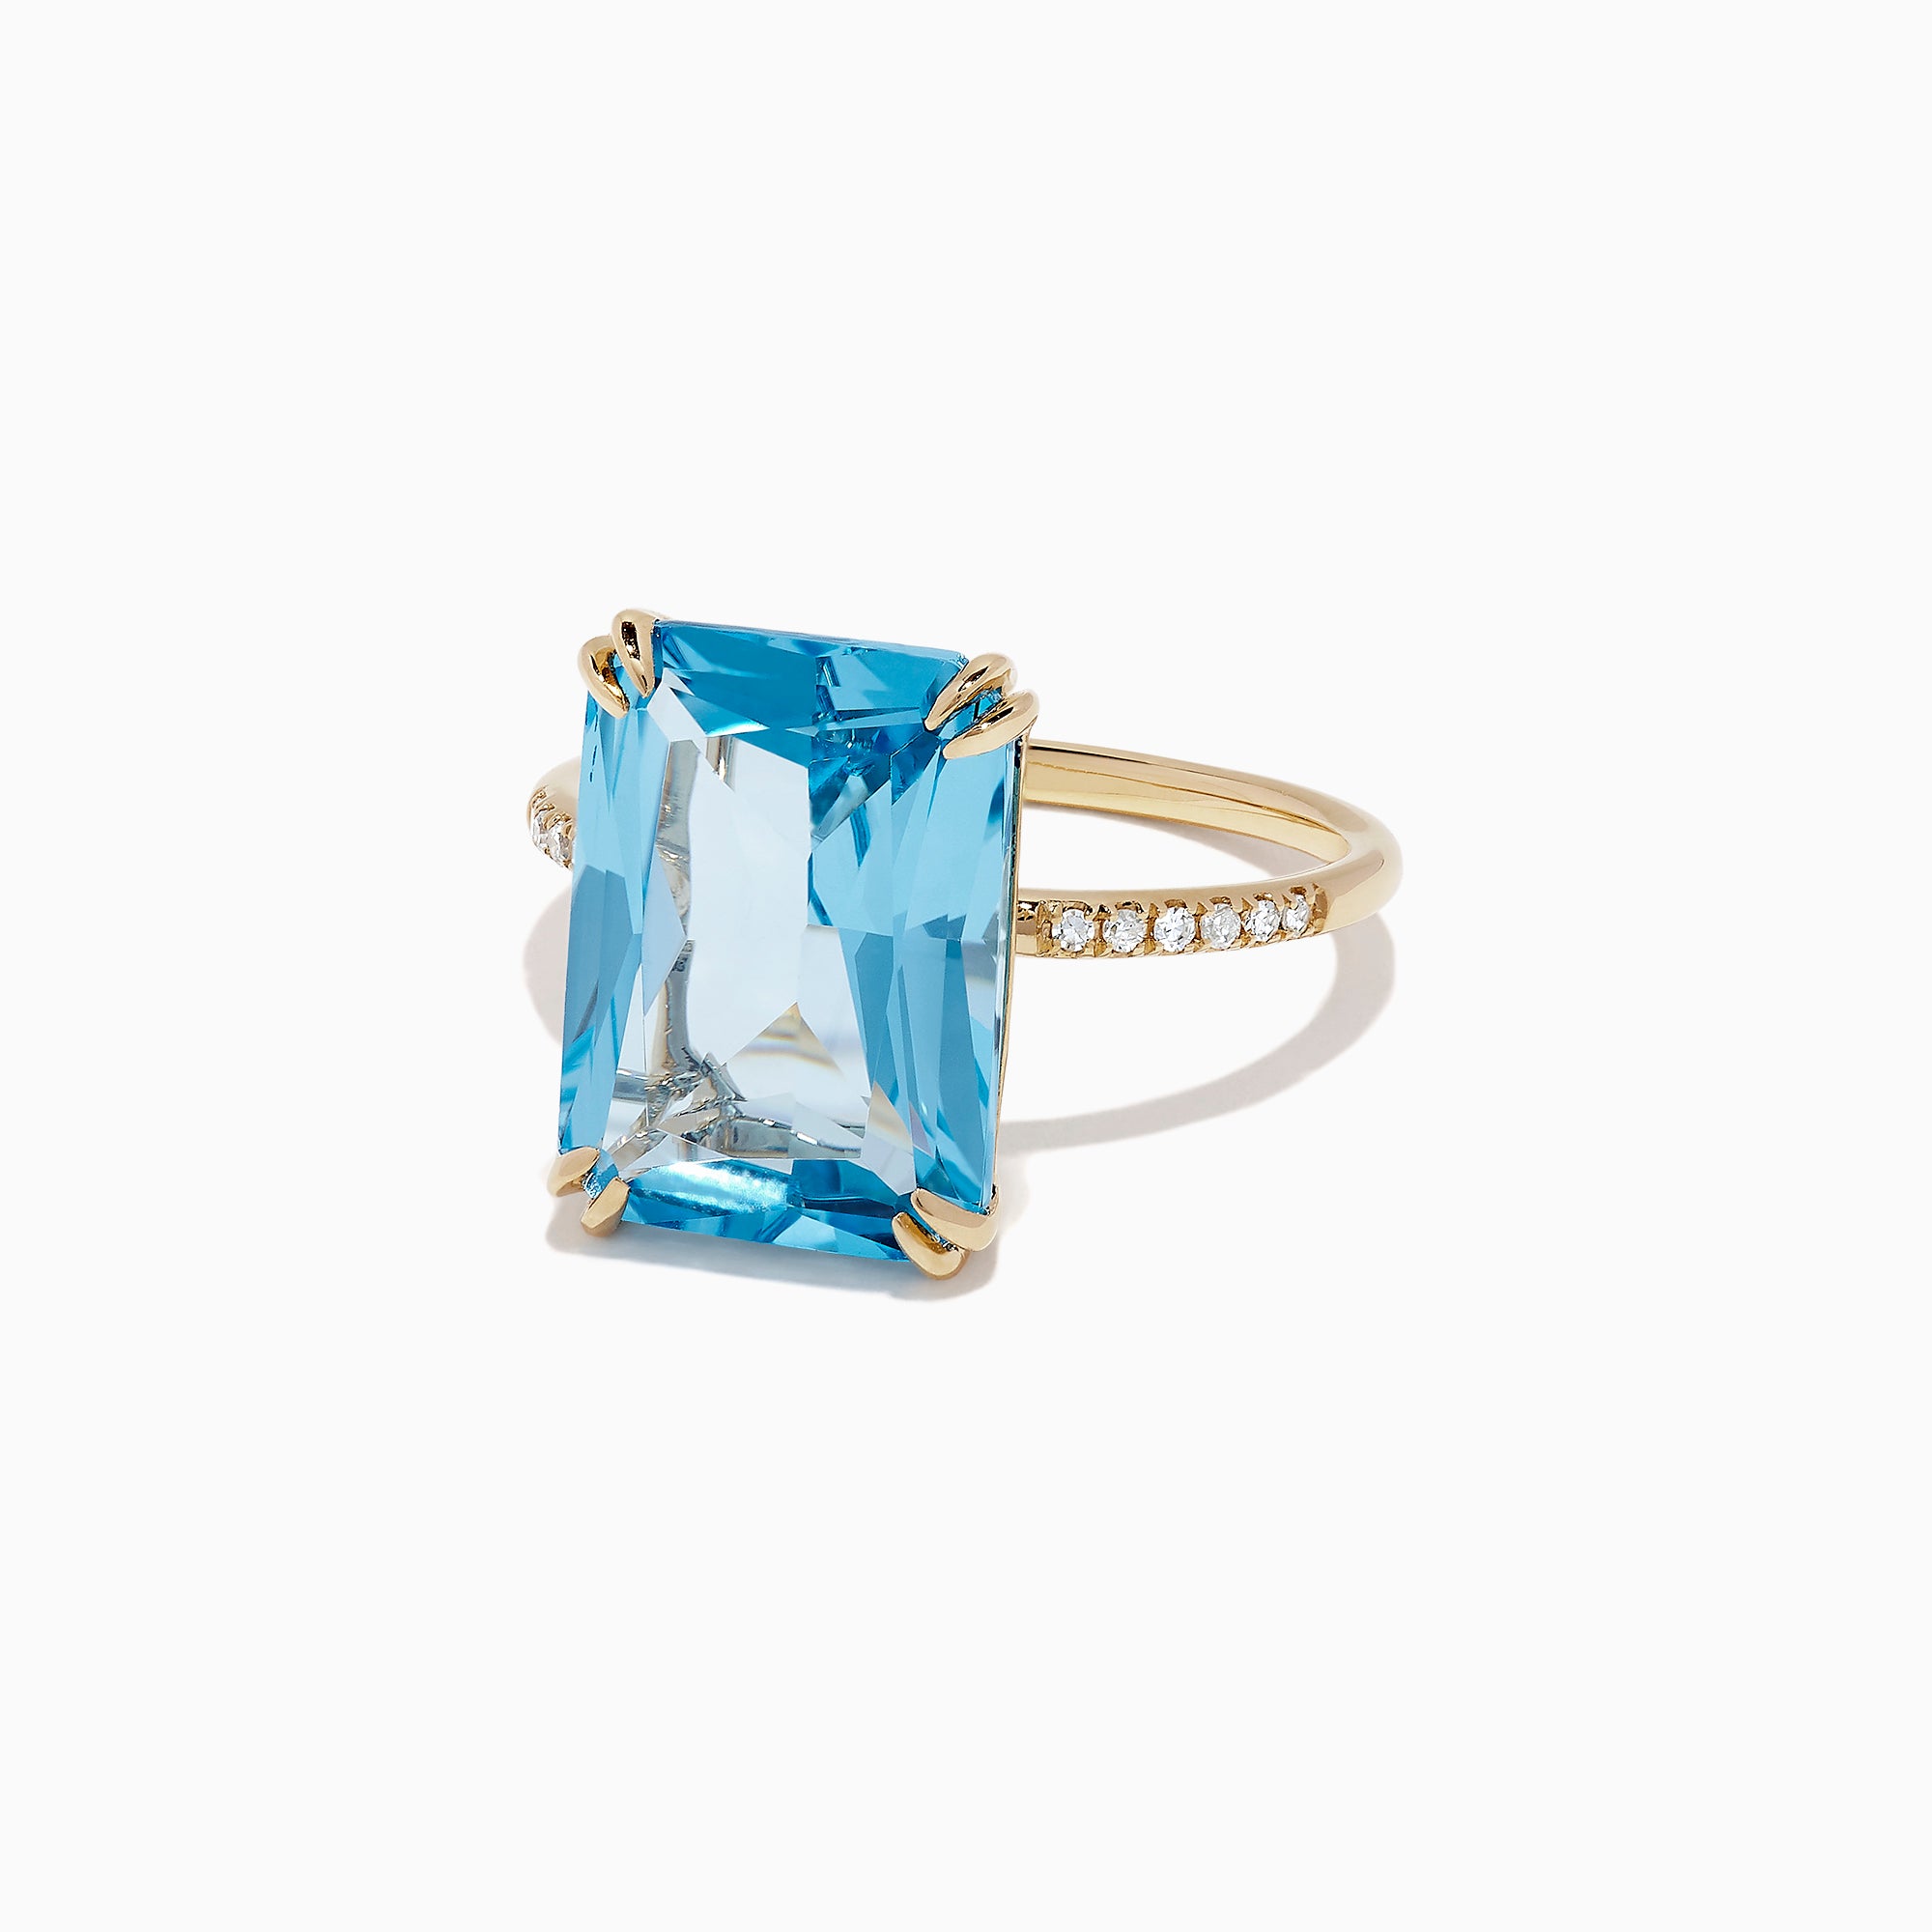 Effy Ocean Bleu 14K Yellow Gold Blue Topaz and Diamond Ring, 8.06